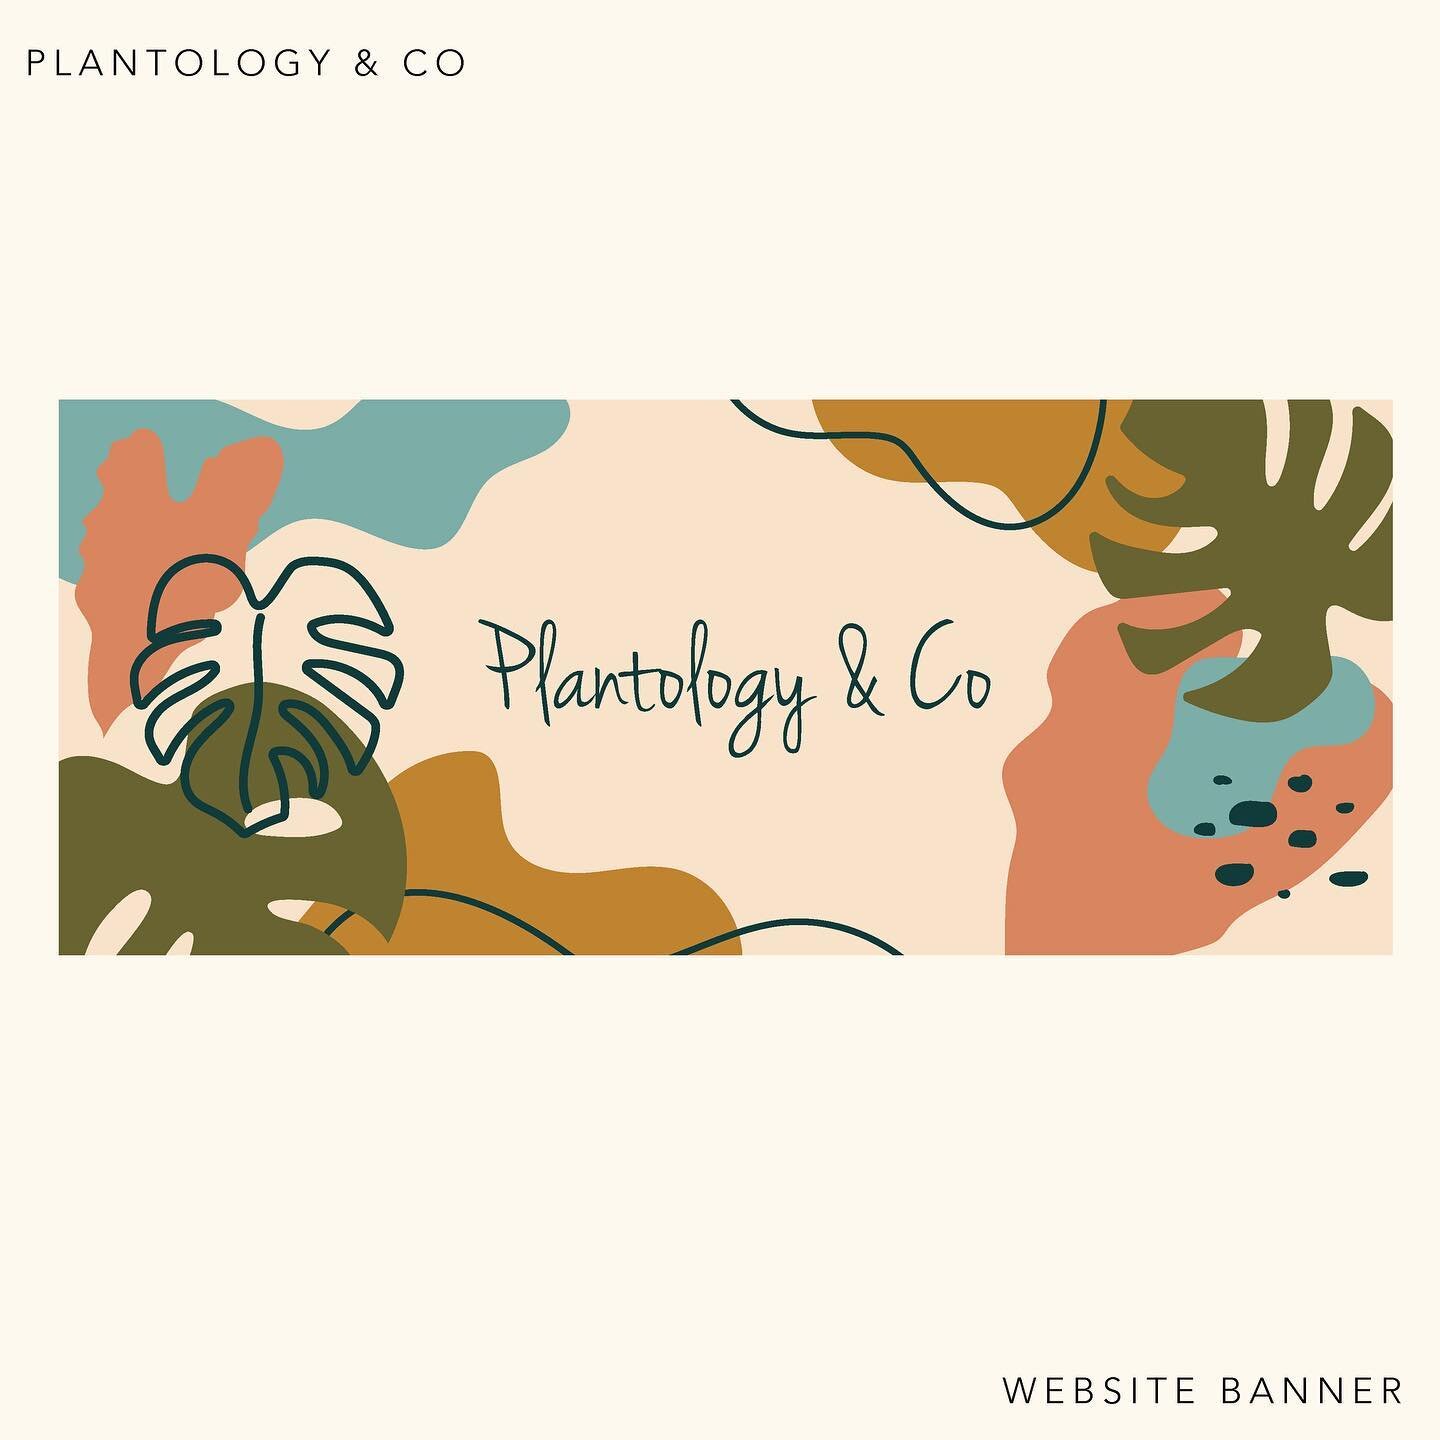 Website banner for Plantology &amp; Co. 
.
.
.
.
.
.
.
.
.
.
.
.
.
.
.
.
.
.
.
.
.
.
.
.
.
#websitebanner #websiteelements #customdesign #custombranding #brand #brandidentity #brandlogo #font #plantshoplogo #plantshop #plantshopbranding #plantlogo #p